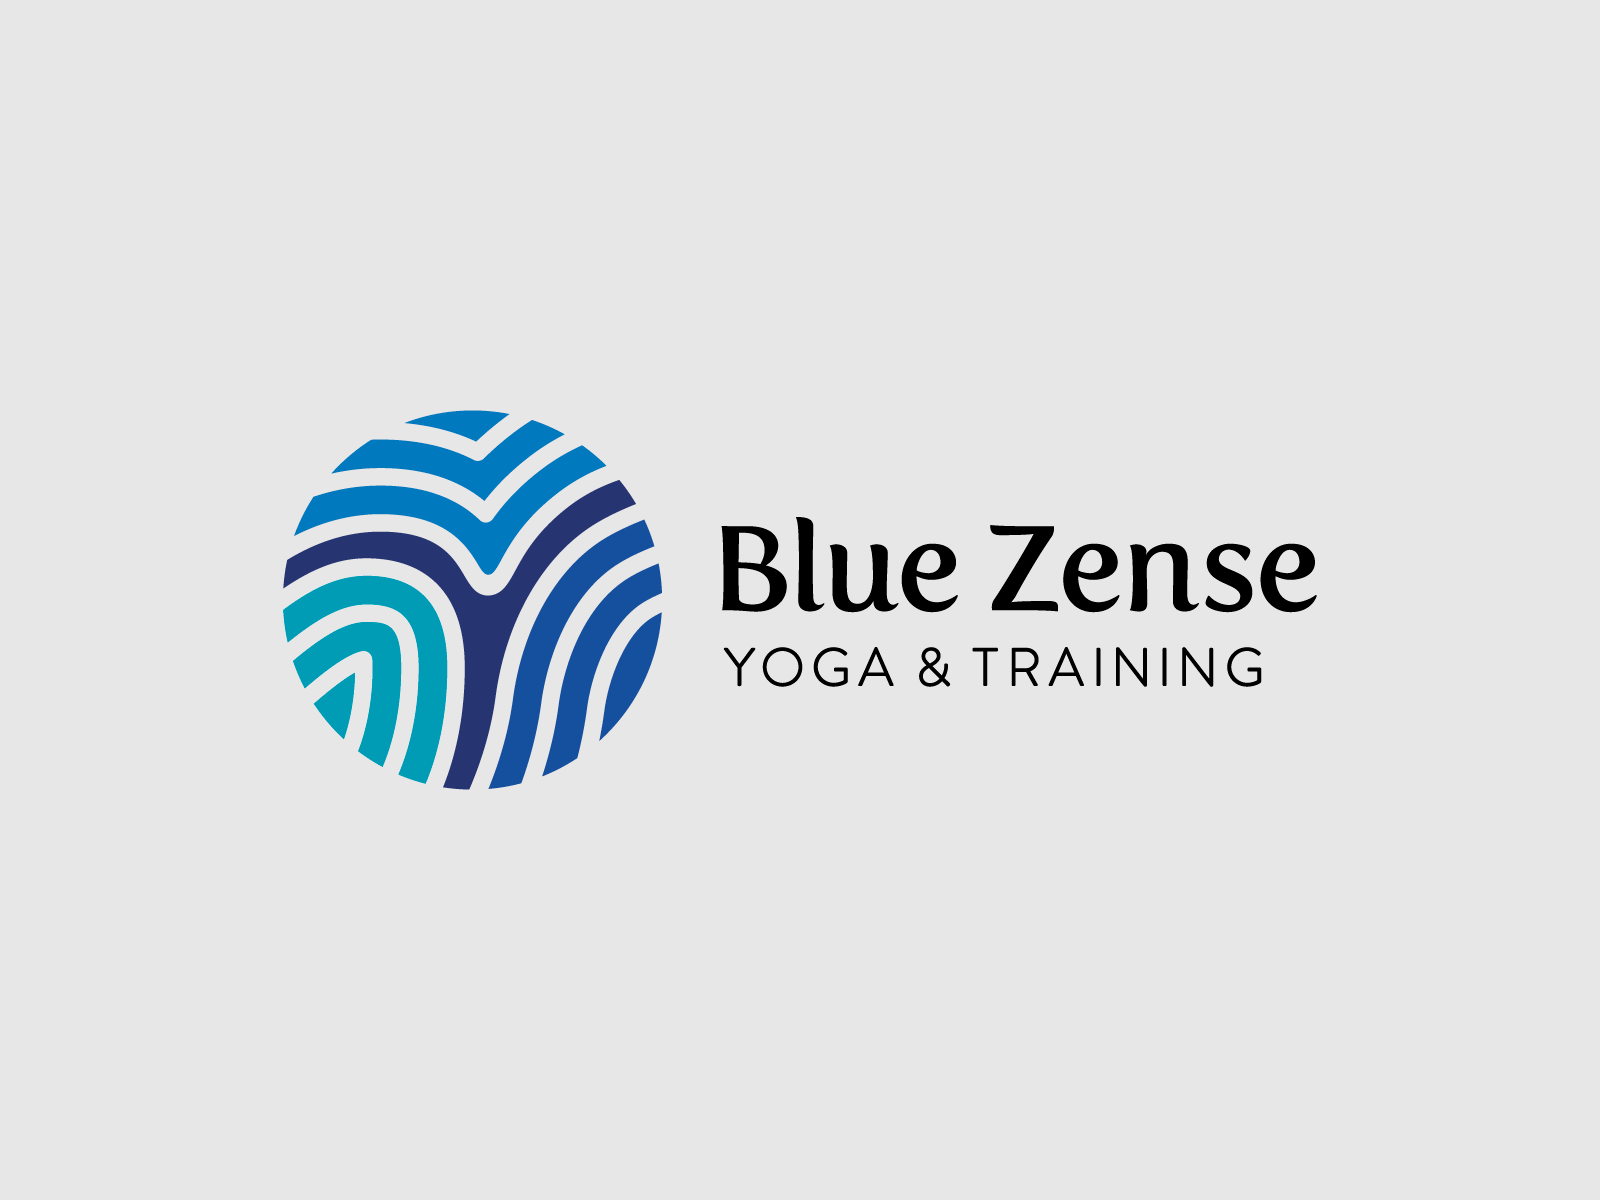 Blue Zense logo